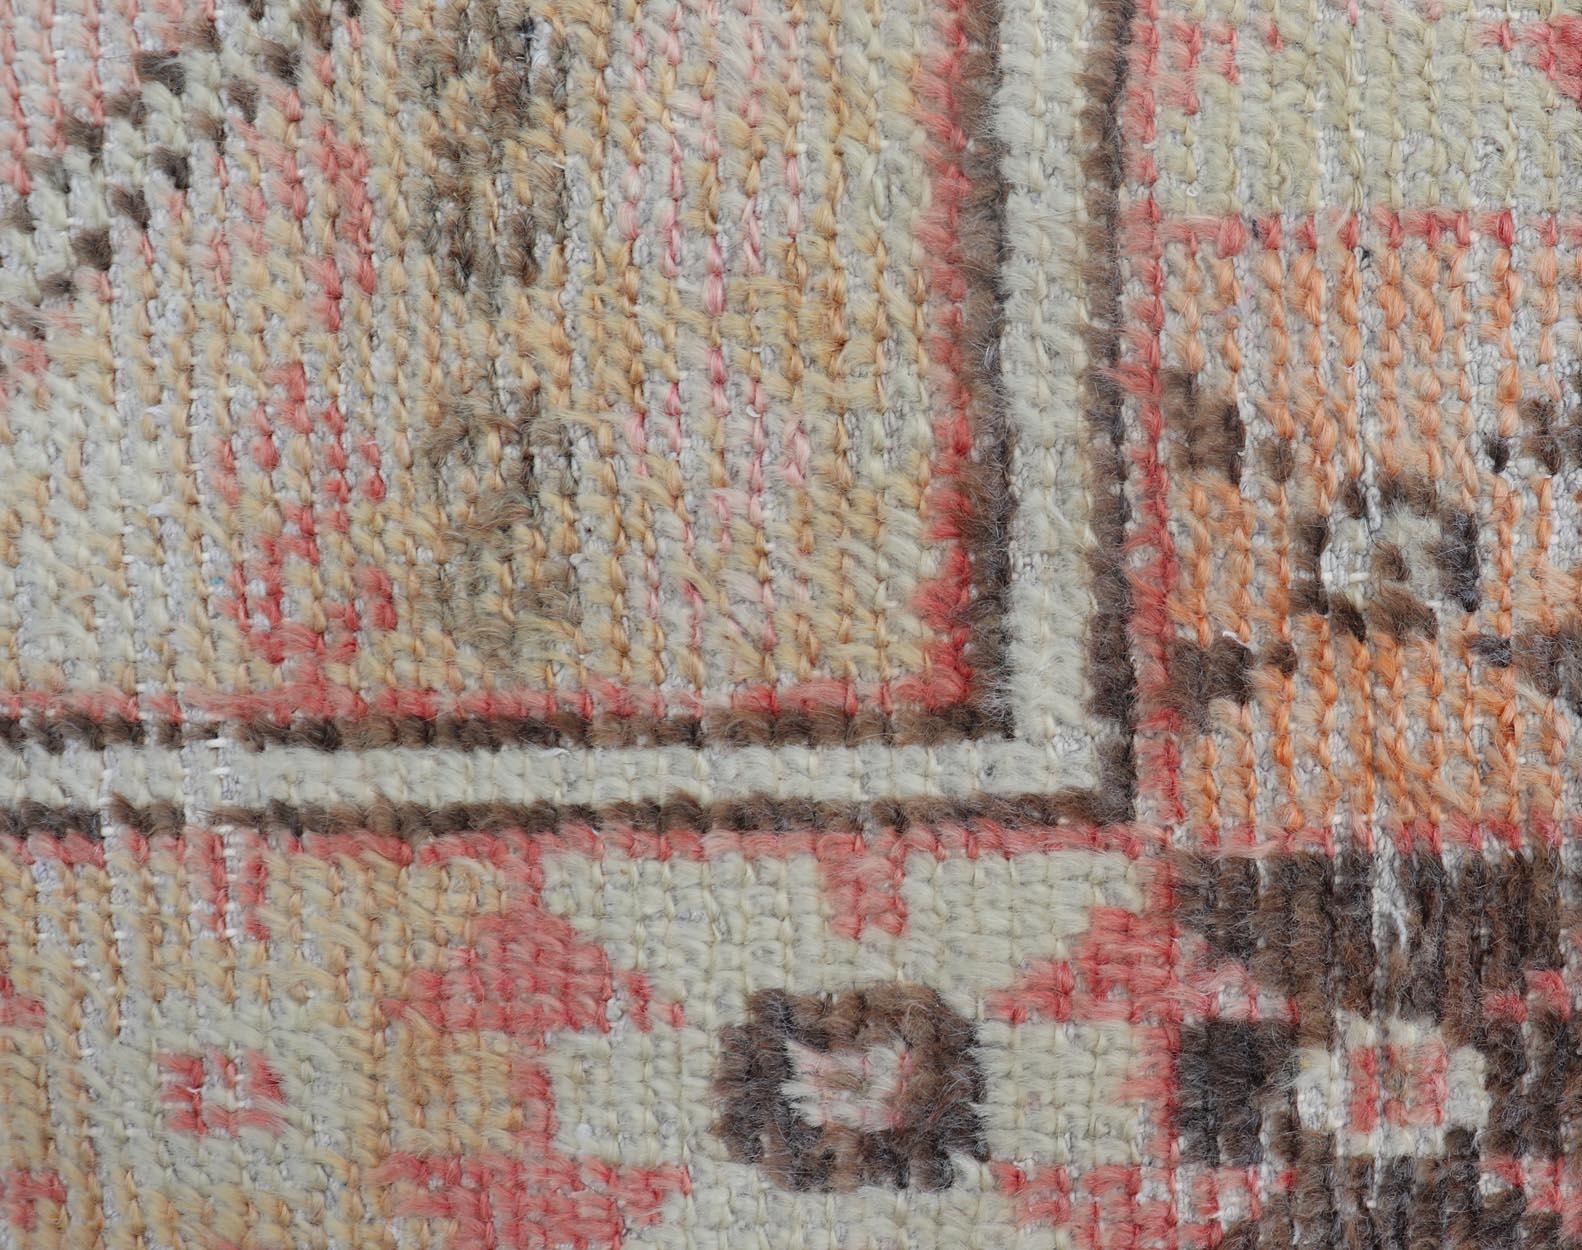 Vintage Turkish Oushak Carpet with Beautiful Floral Motifs and Medallion. Keivan Woven Arts / rug EN-14623, country of origin / type: Turkey / Oushak, circa mid-20th century.
Measures: 2'8 x 4'0 
This mid-century vintage Oushak carpet features an